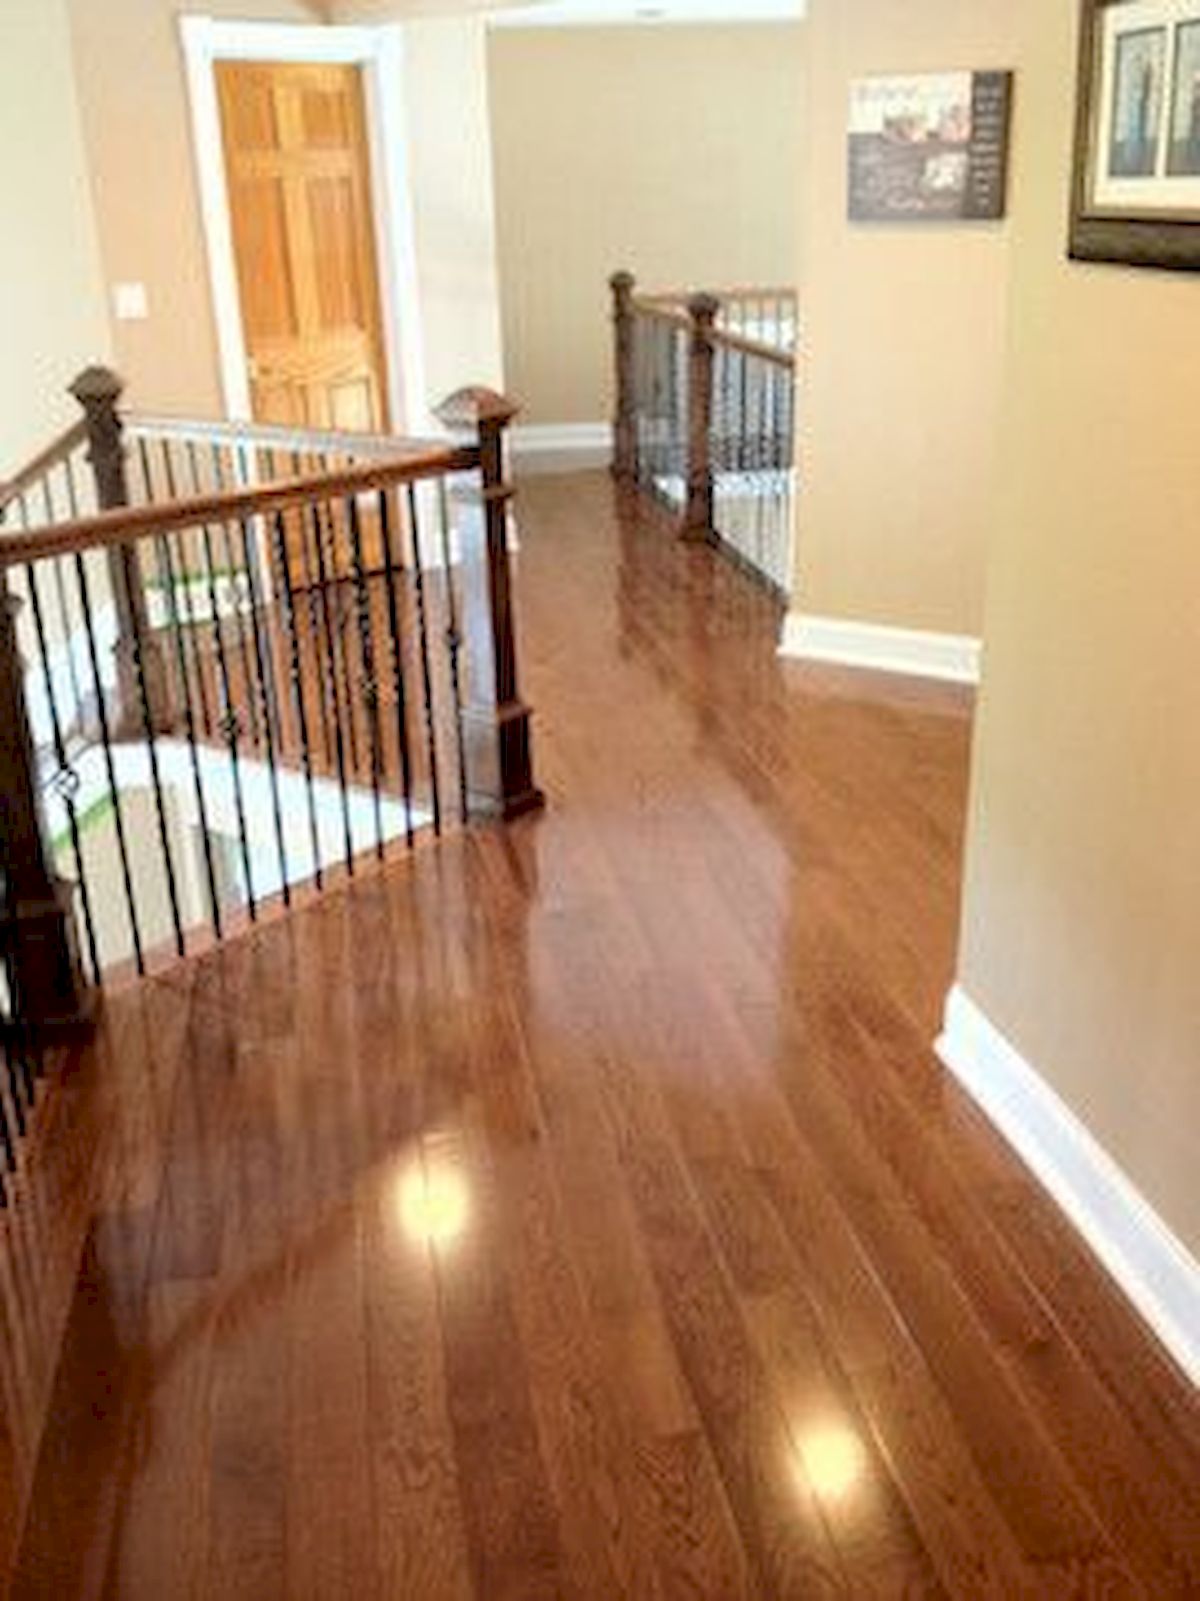 80 Gorgeous Hardwood Floor Ideas For Interior Home (56)